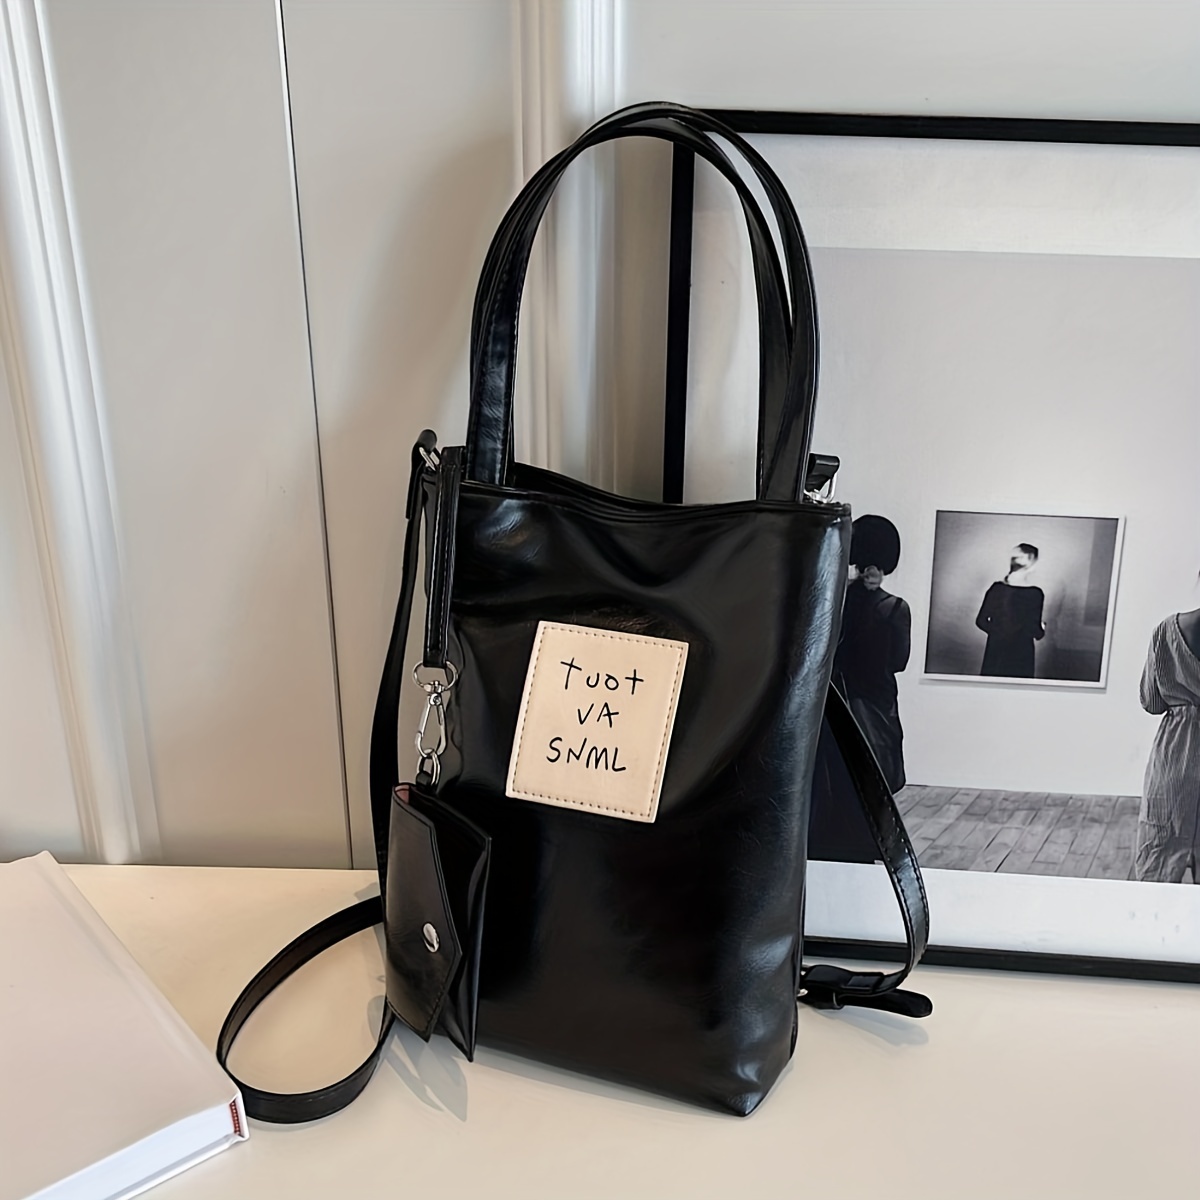 Brown Bucket Bag With Cherry Design Bag Charm Fashionable Litchi Embossed  PU